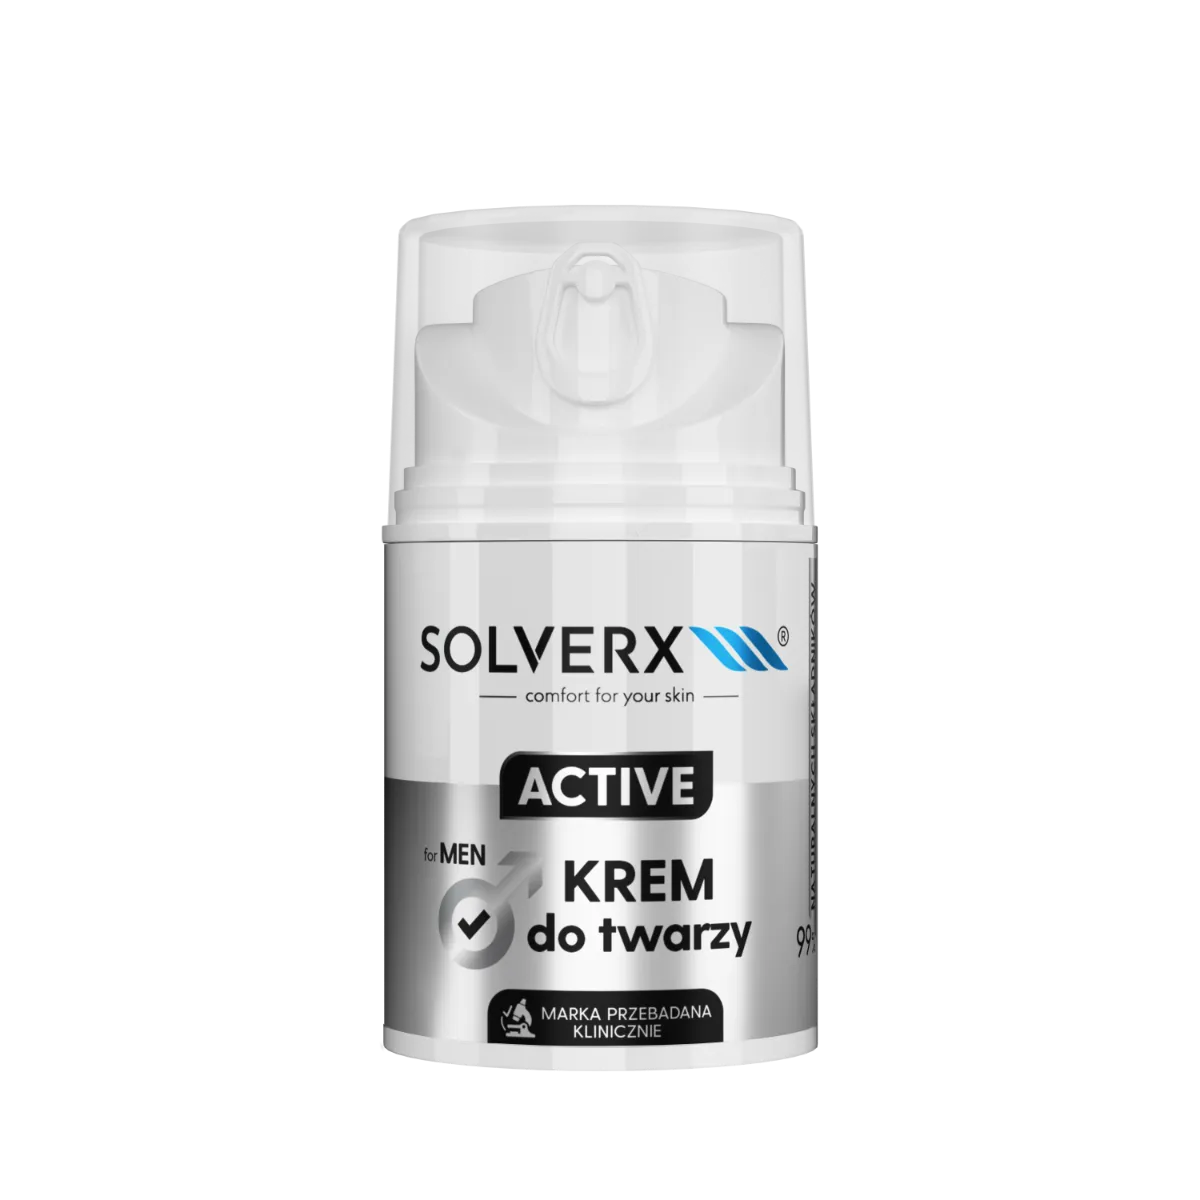 Solverx Active Men Krem do twarzy, 50 ml